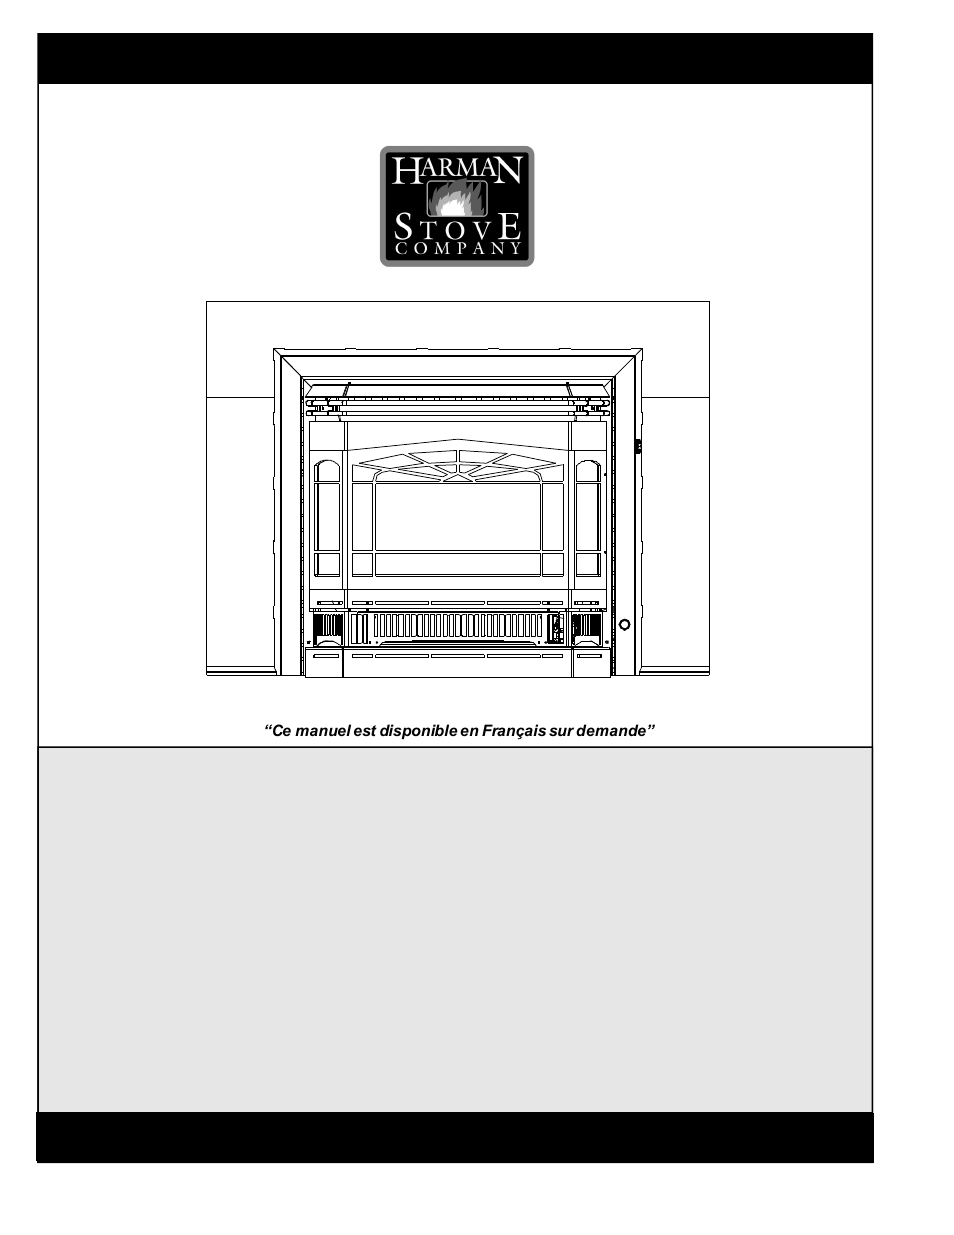 Harman Stove Company 828i User Manual | 23 pages